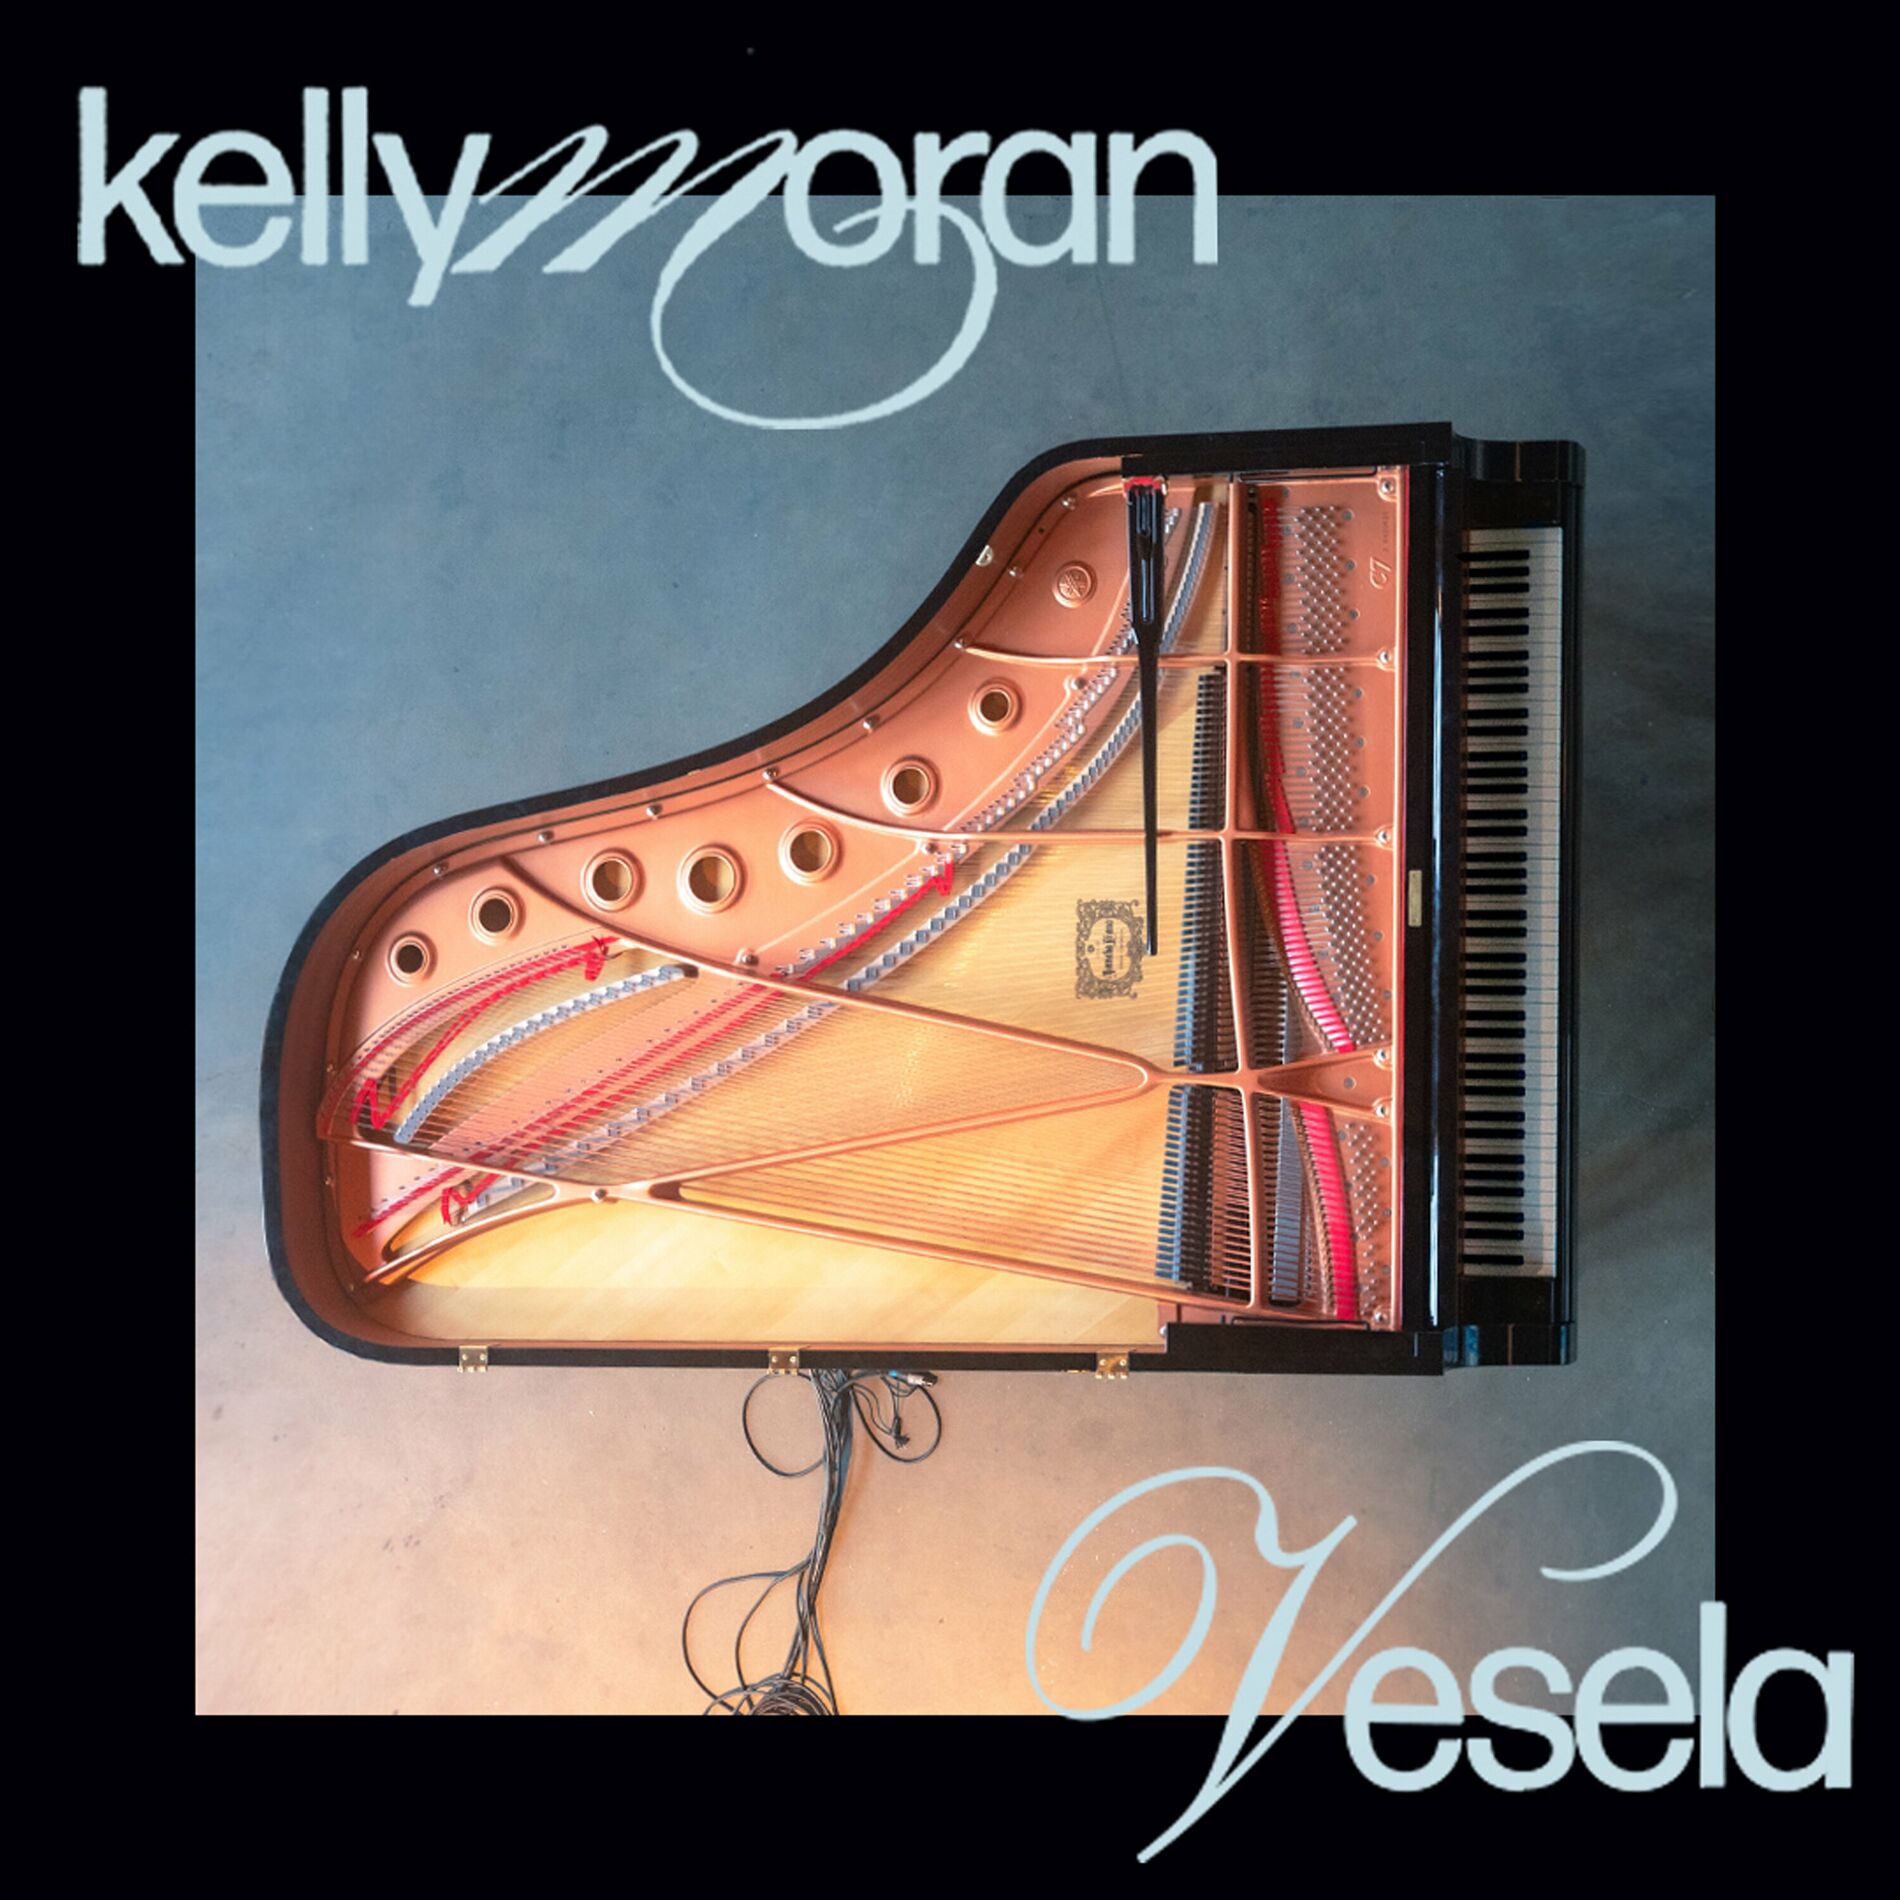 Kelly Moran: albums, songs, playlists | Listen on Deezer